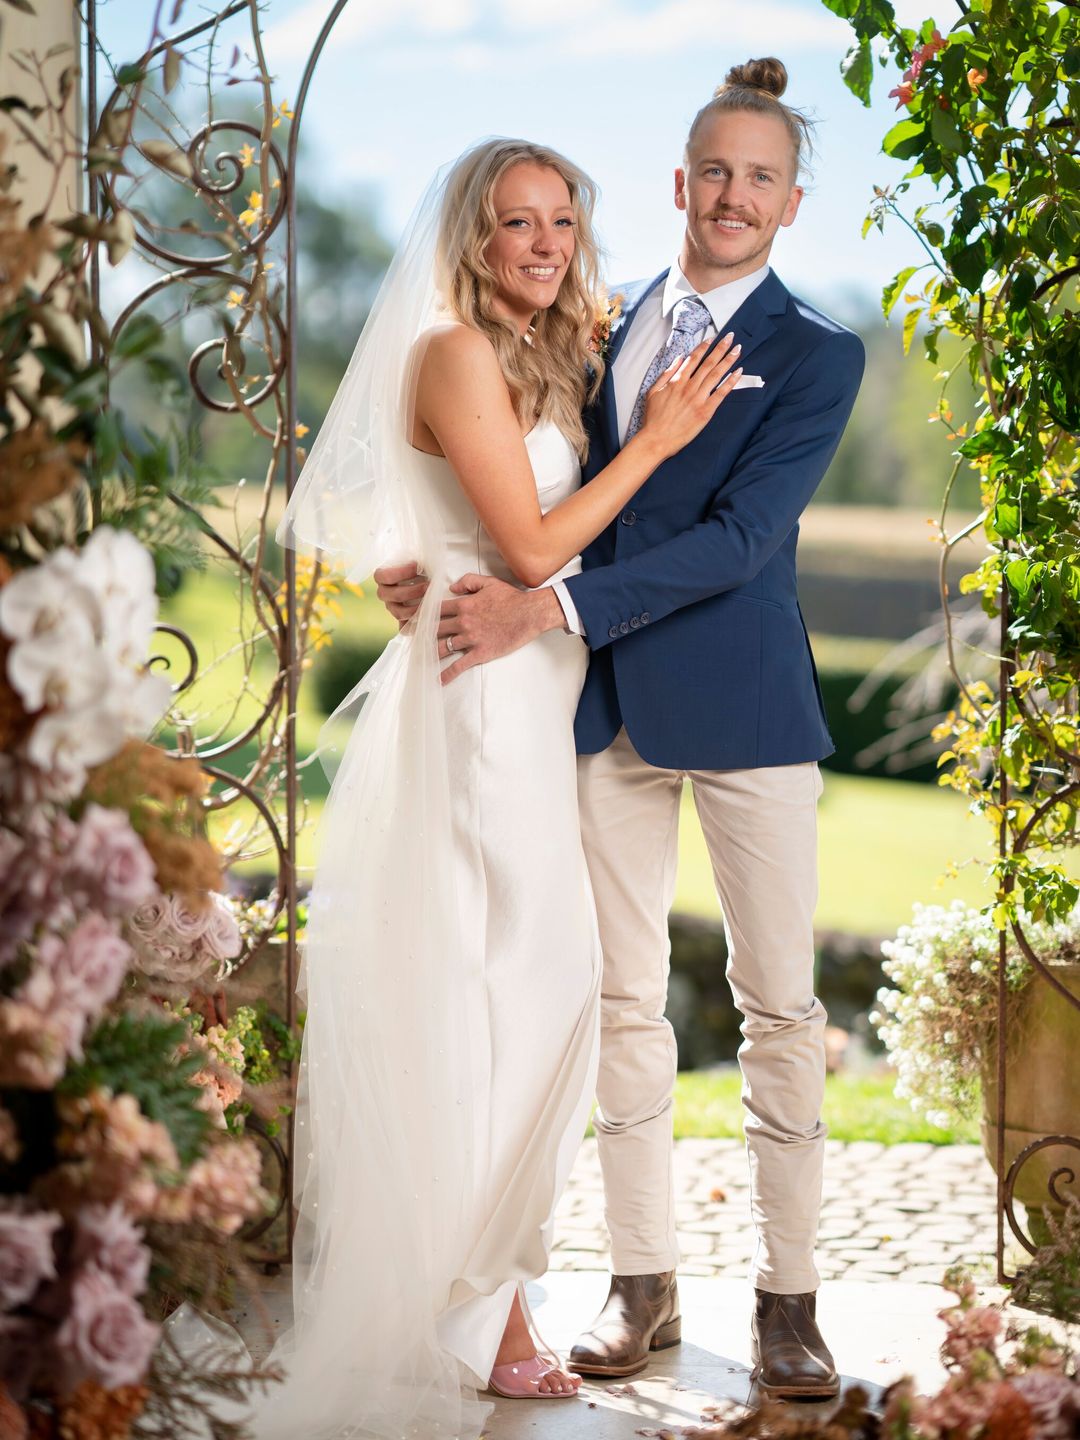 MAFS stars Lyndall and Cameron's wedding